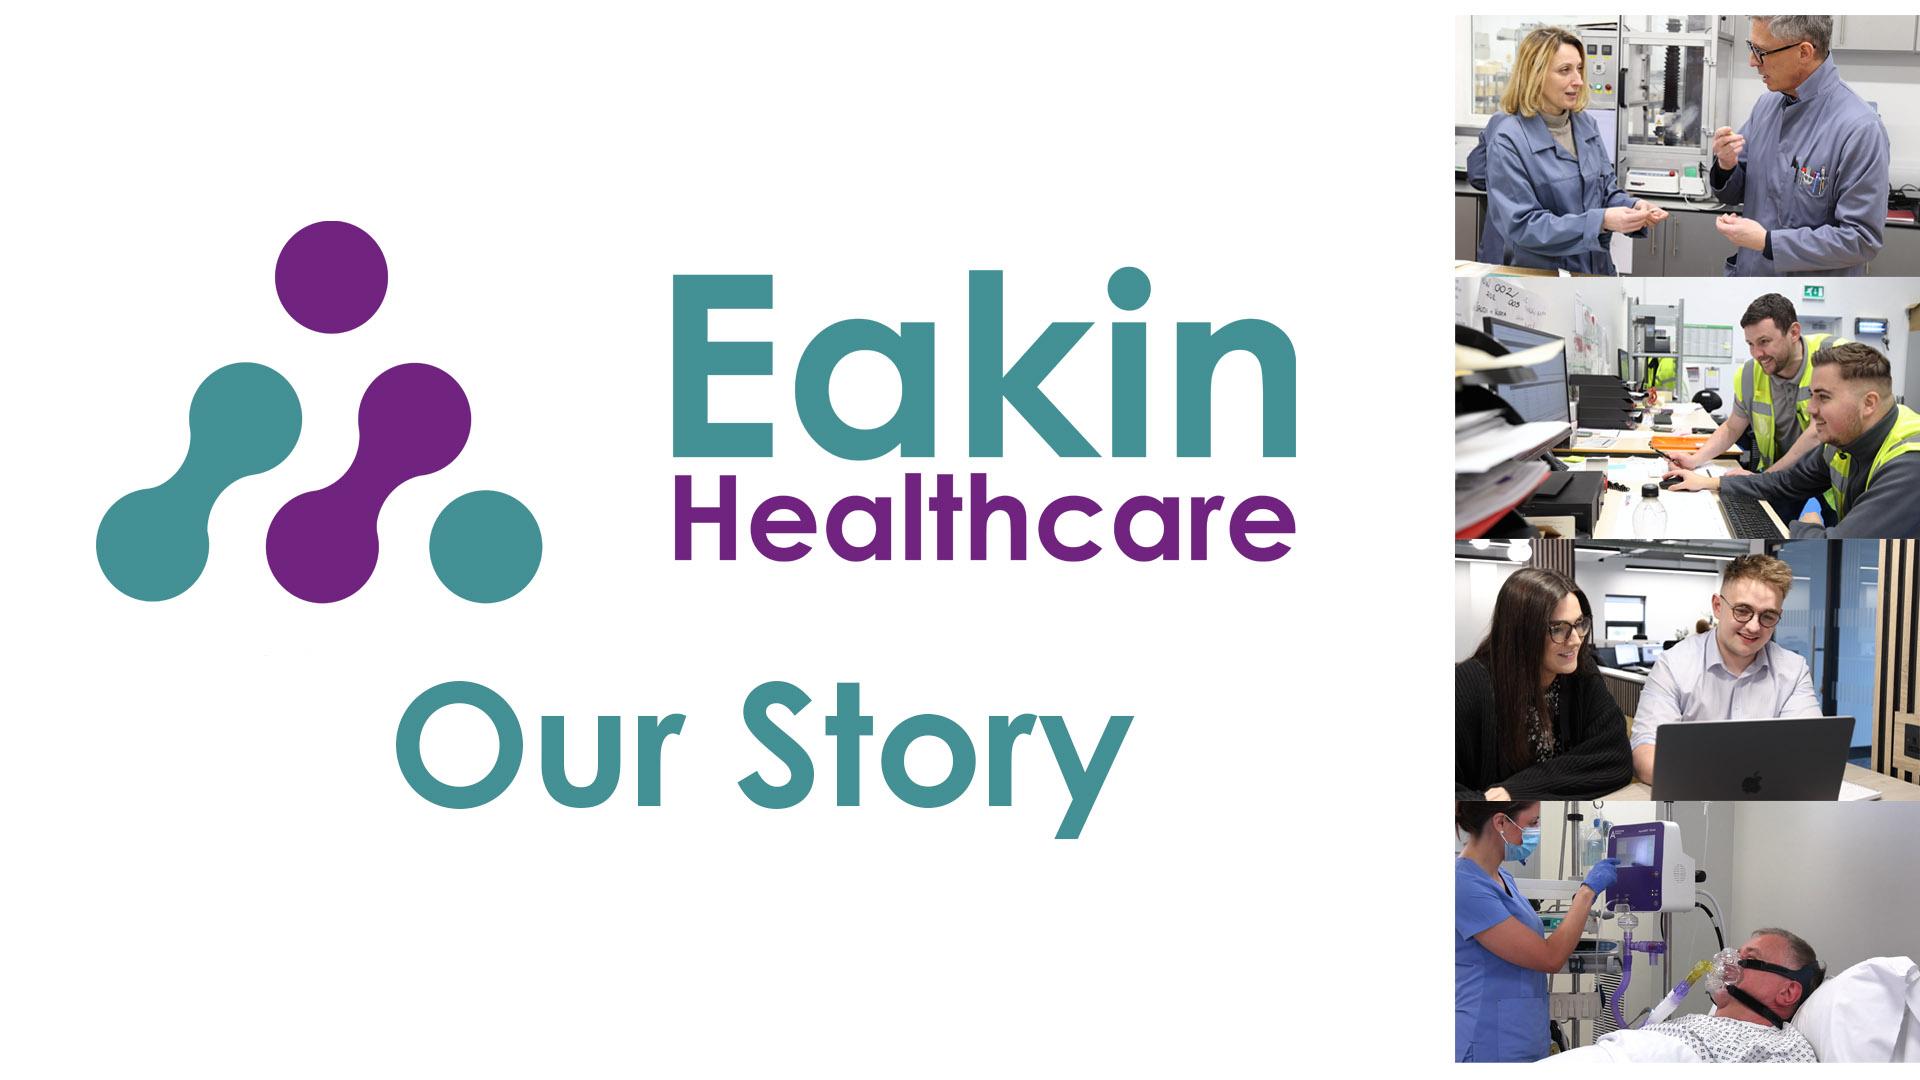 Staff at Eakin Healthcare explaining the Eakin Healthcare story